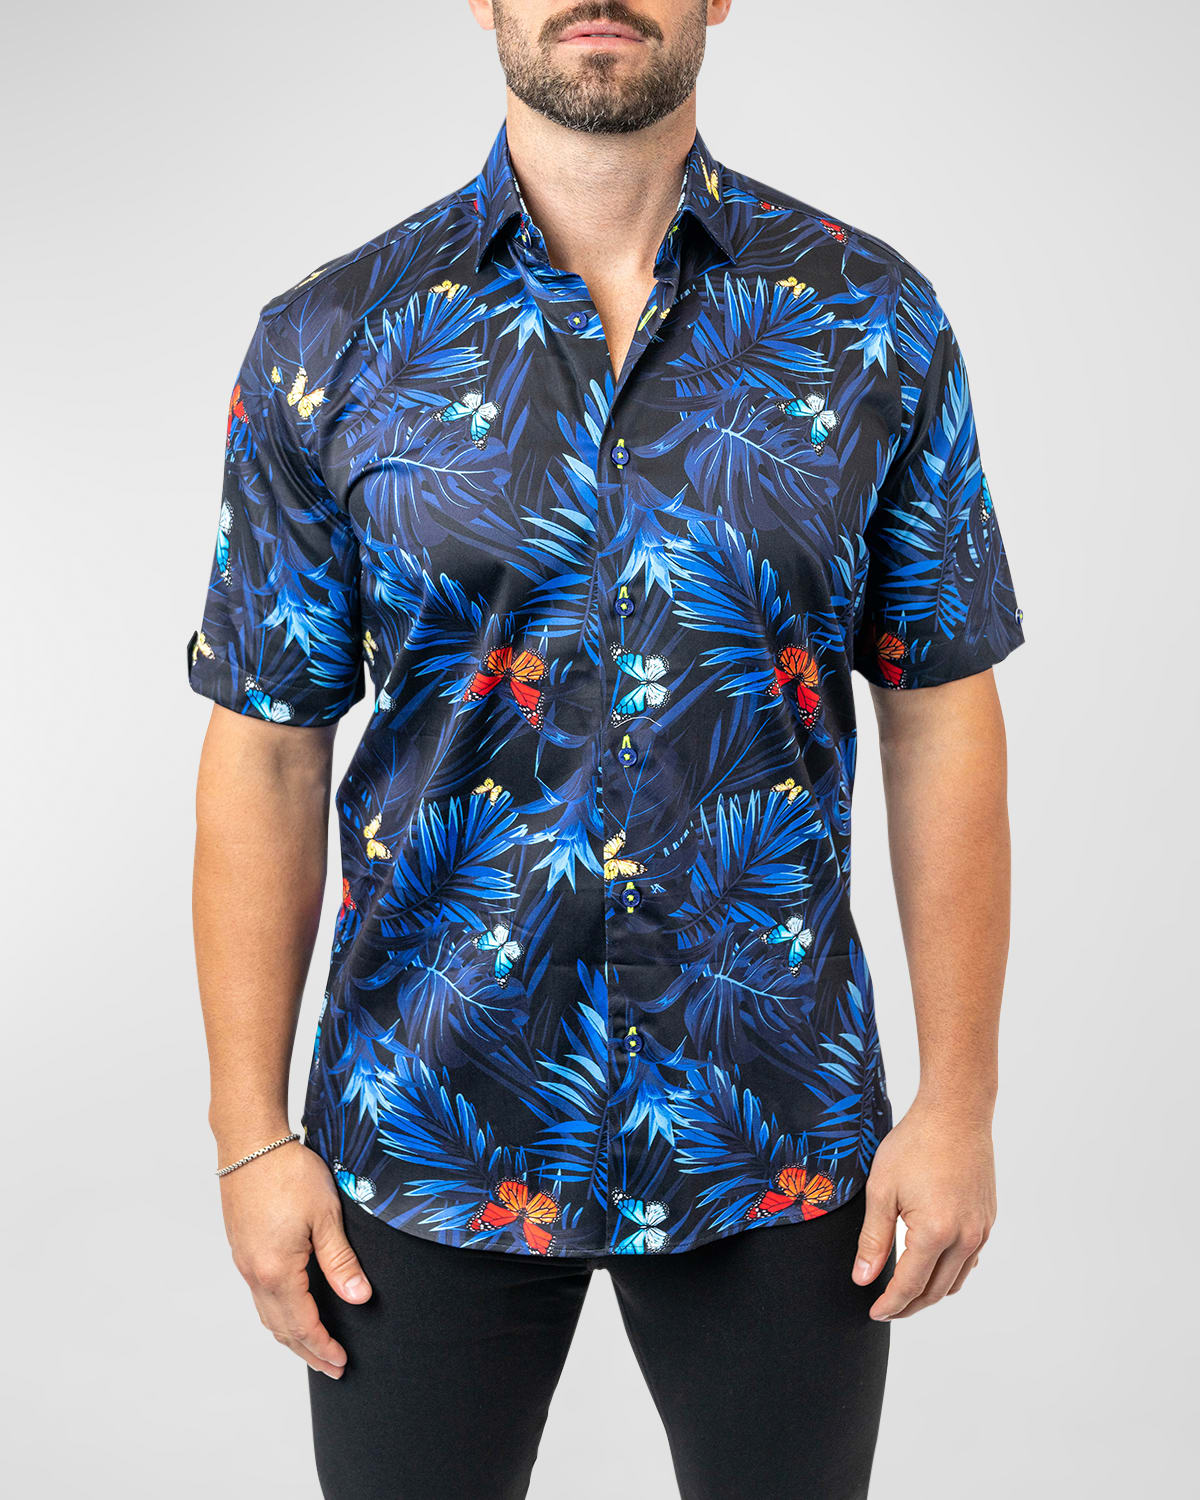 Men's Galileo Butterfly Palm Sport Shirt